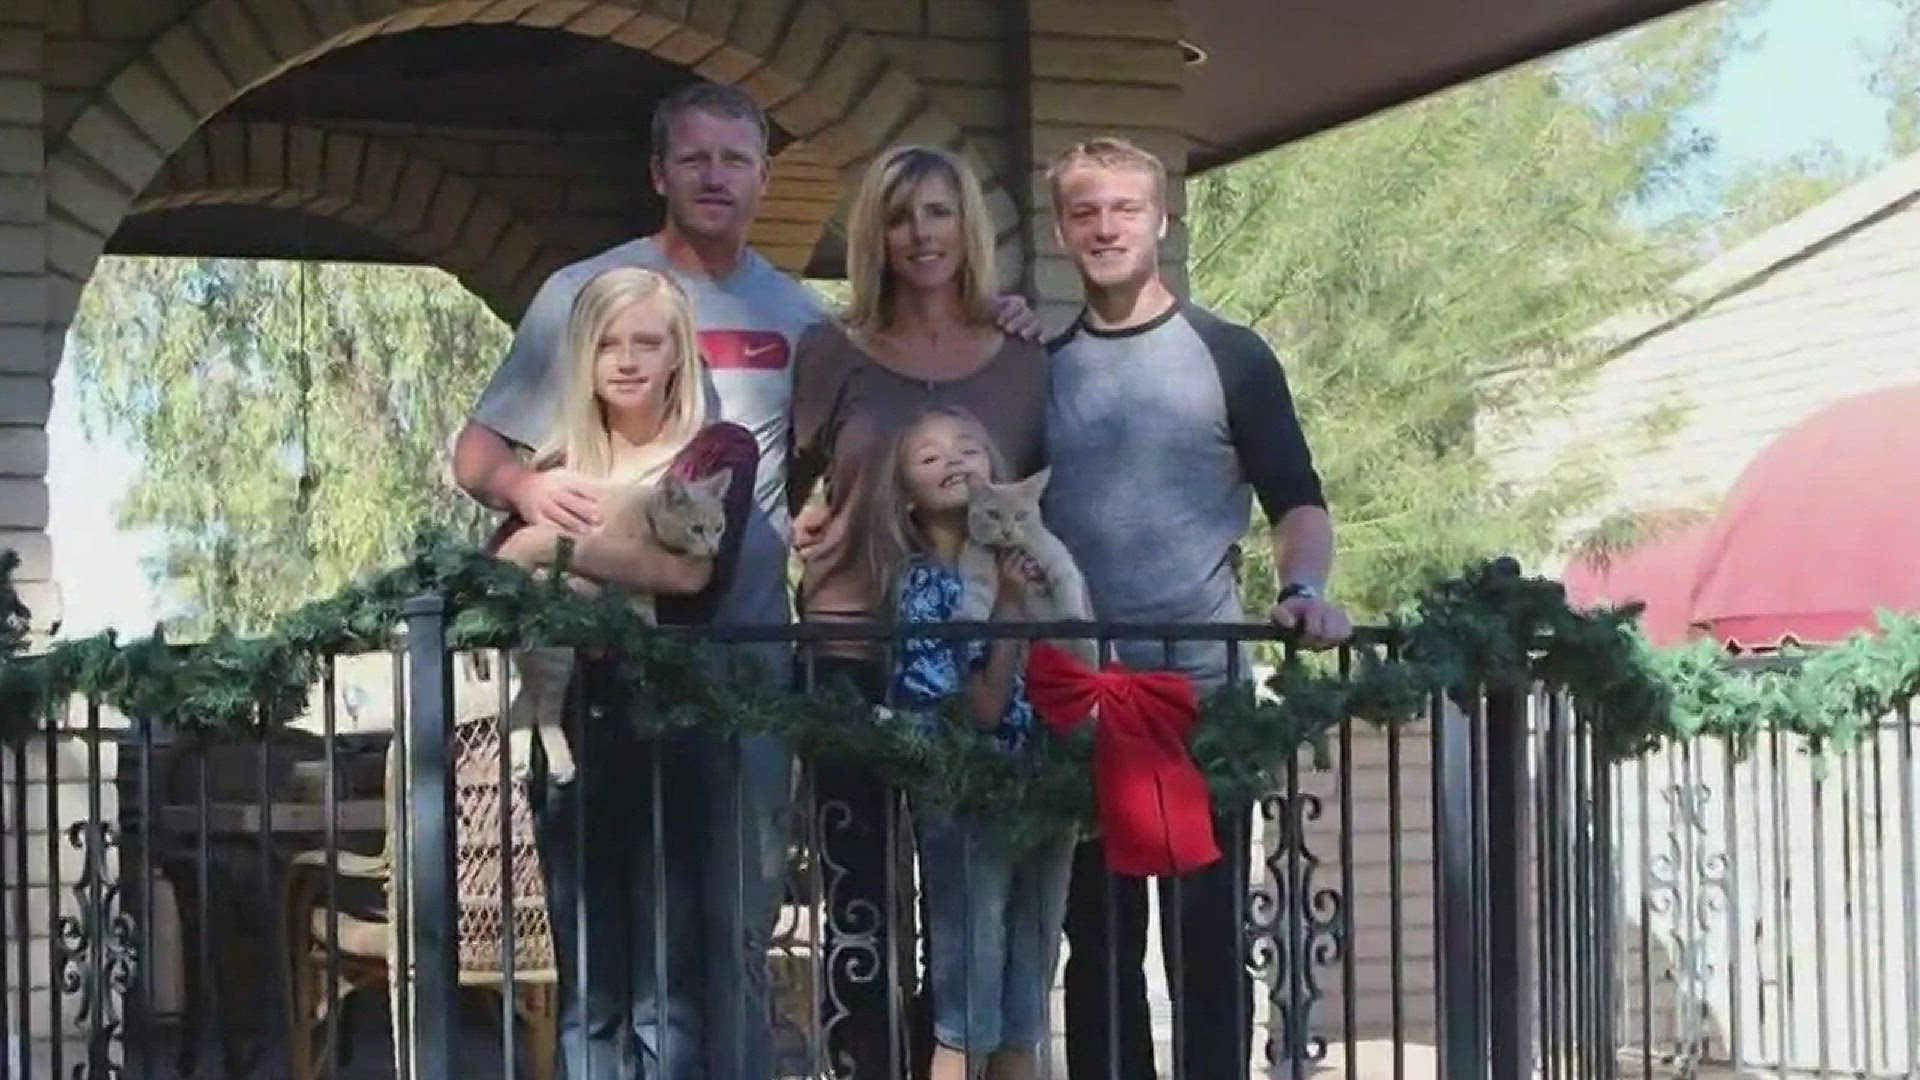 One Arizona families' home has turned into a pole vaulting compound.